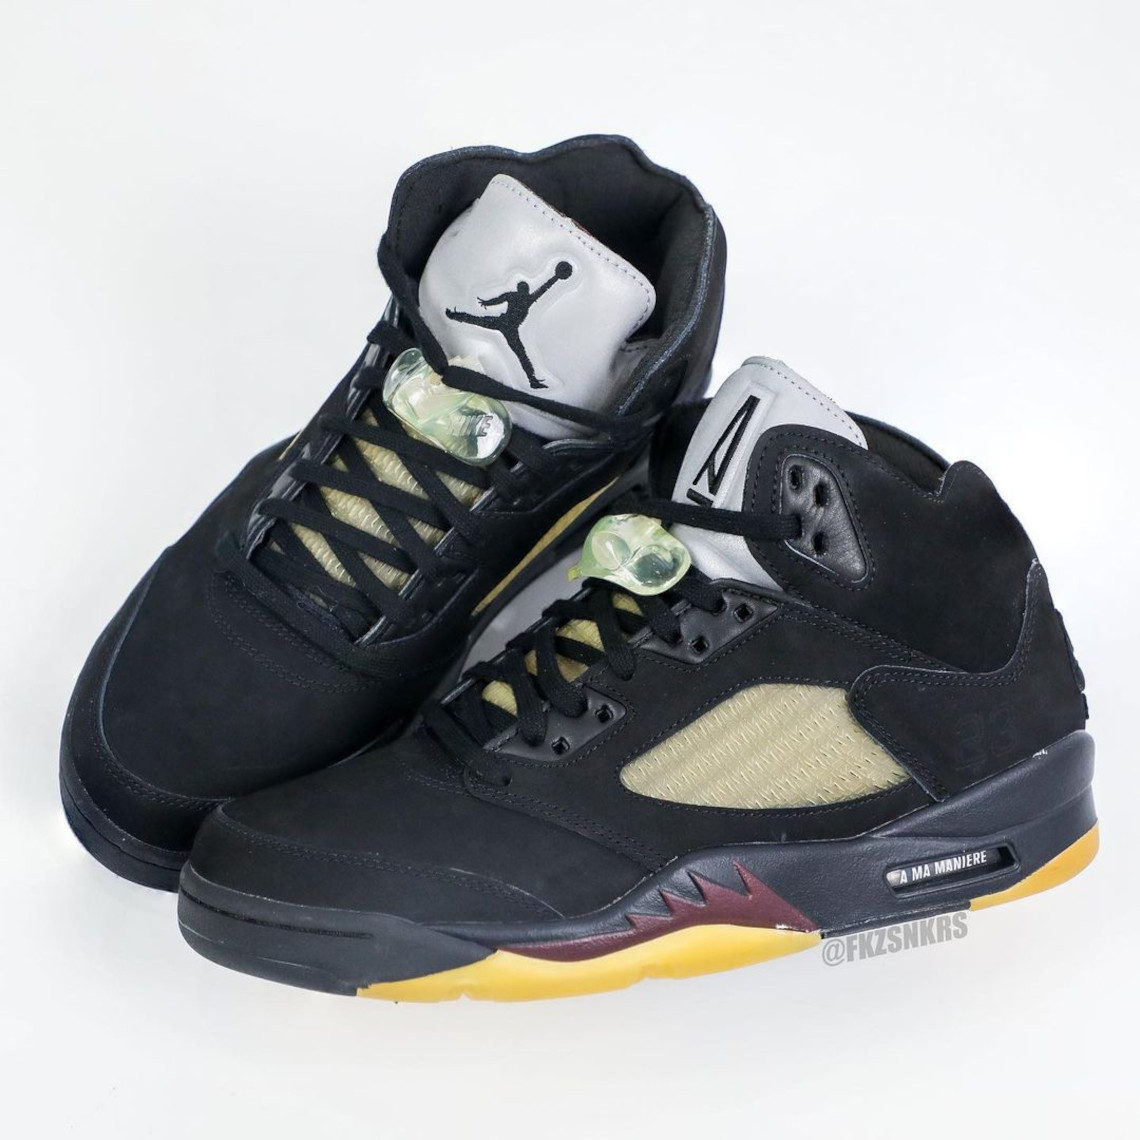 A Ma Maniére x Air Jordan 5 “Black” FD1330-001 | SneakerNews.com